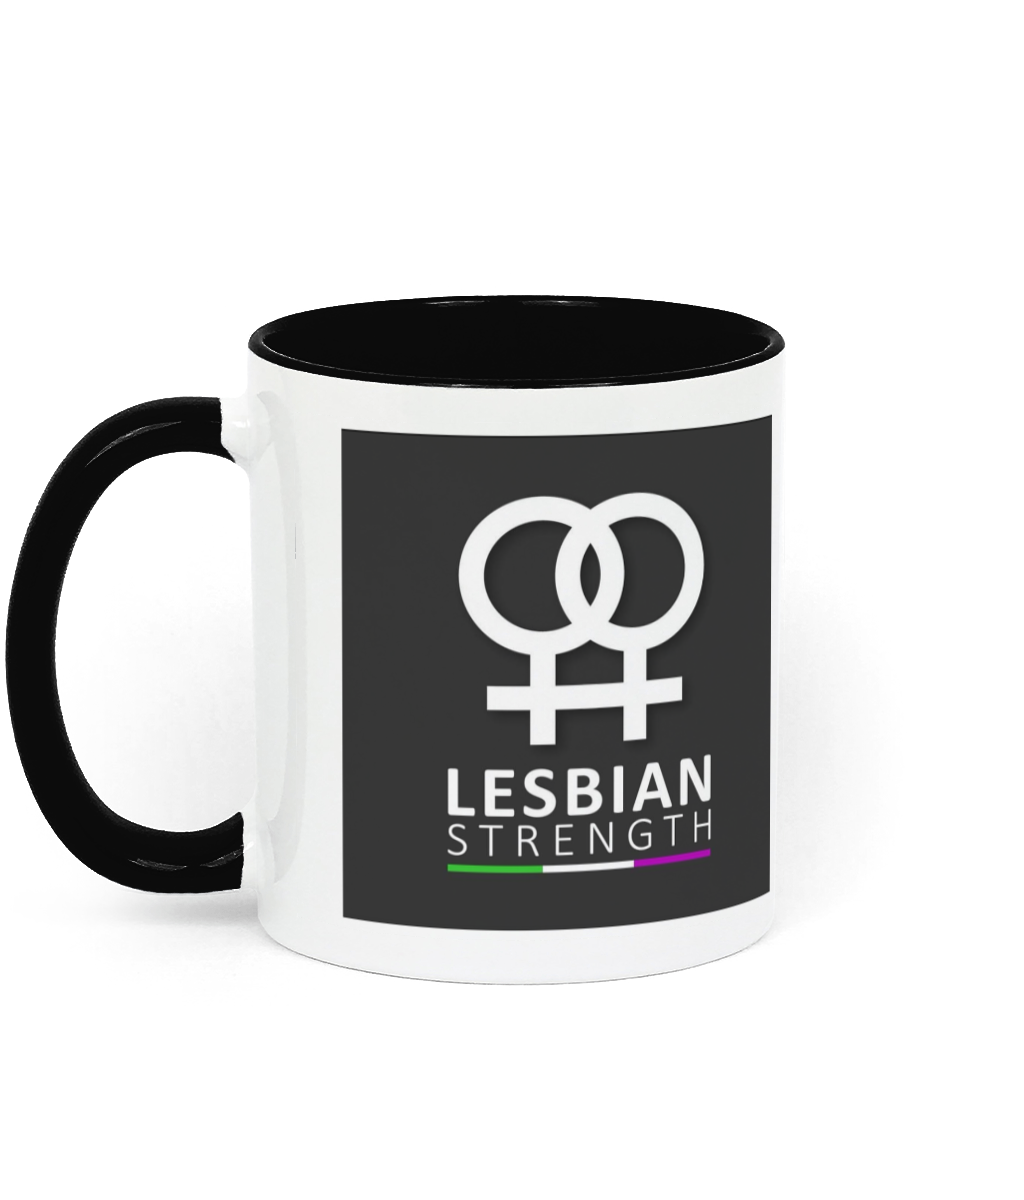 Lesbian Strength Two-Tone Ceramic Mug